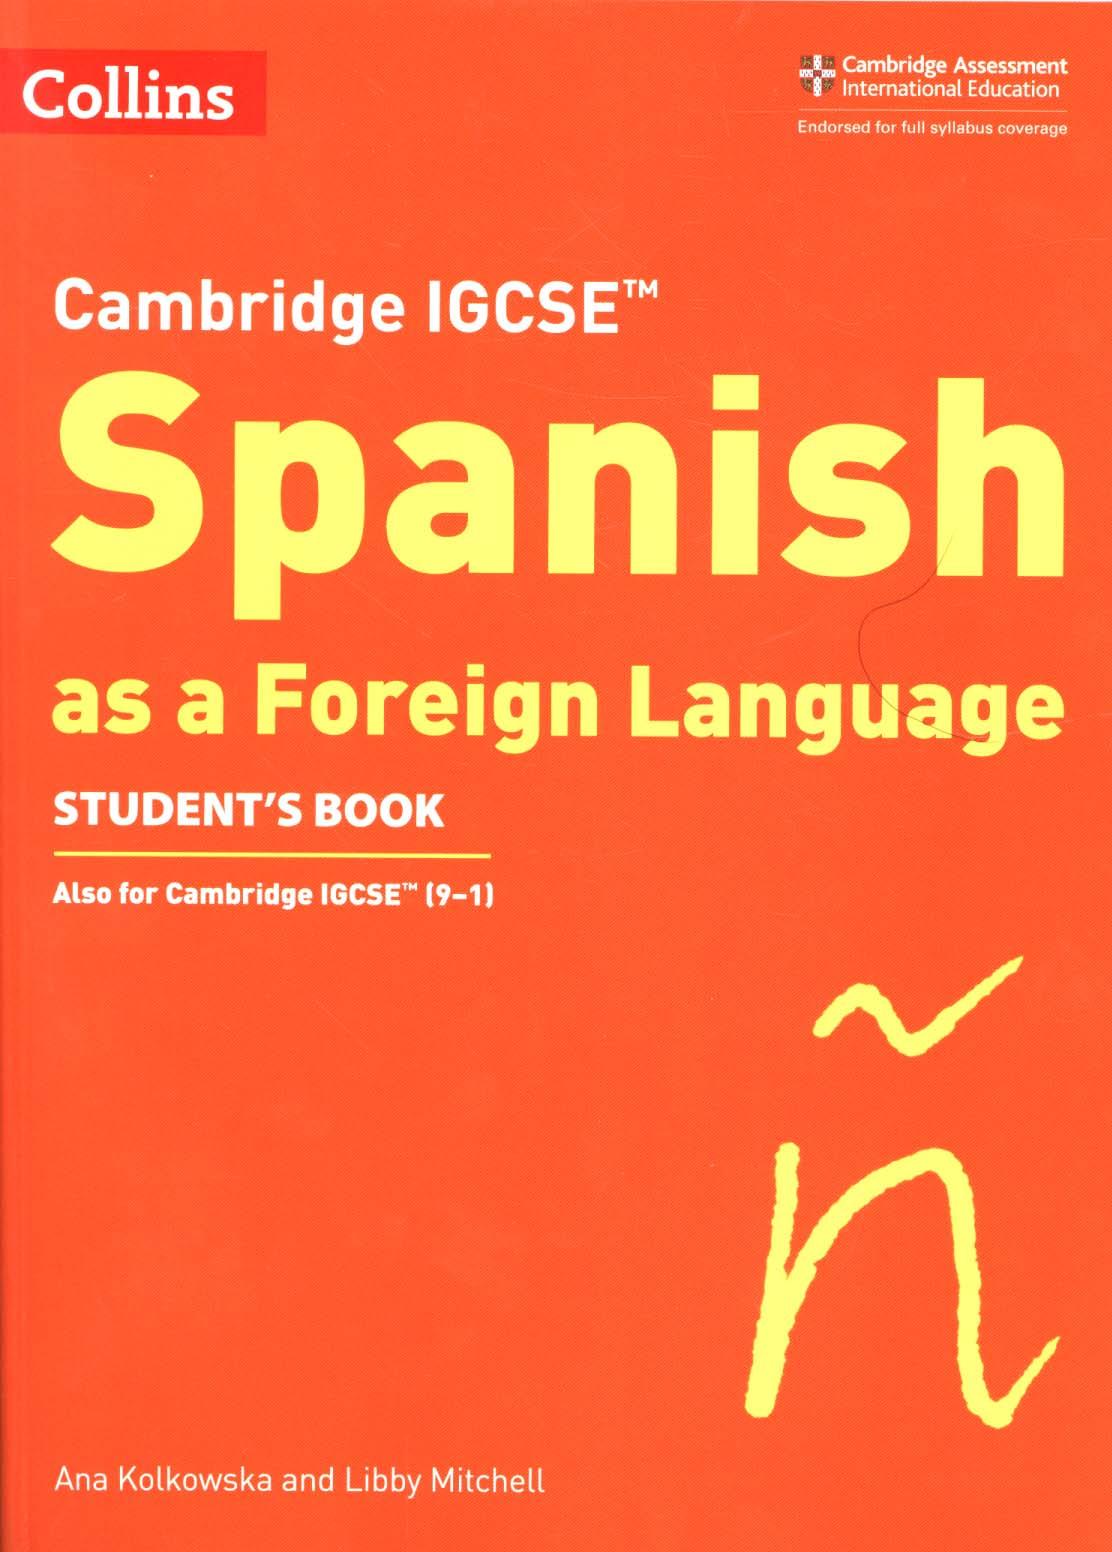 Cambridge IGCSE (TM) Spanish Student's Book